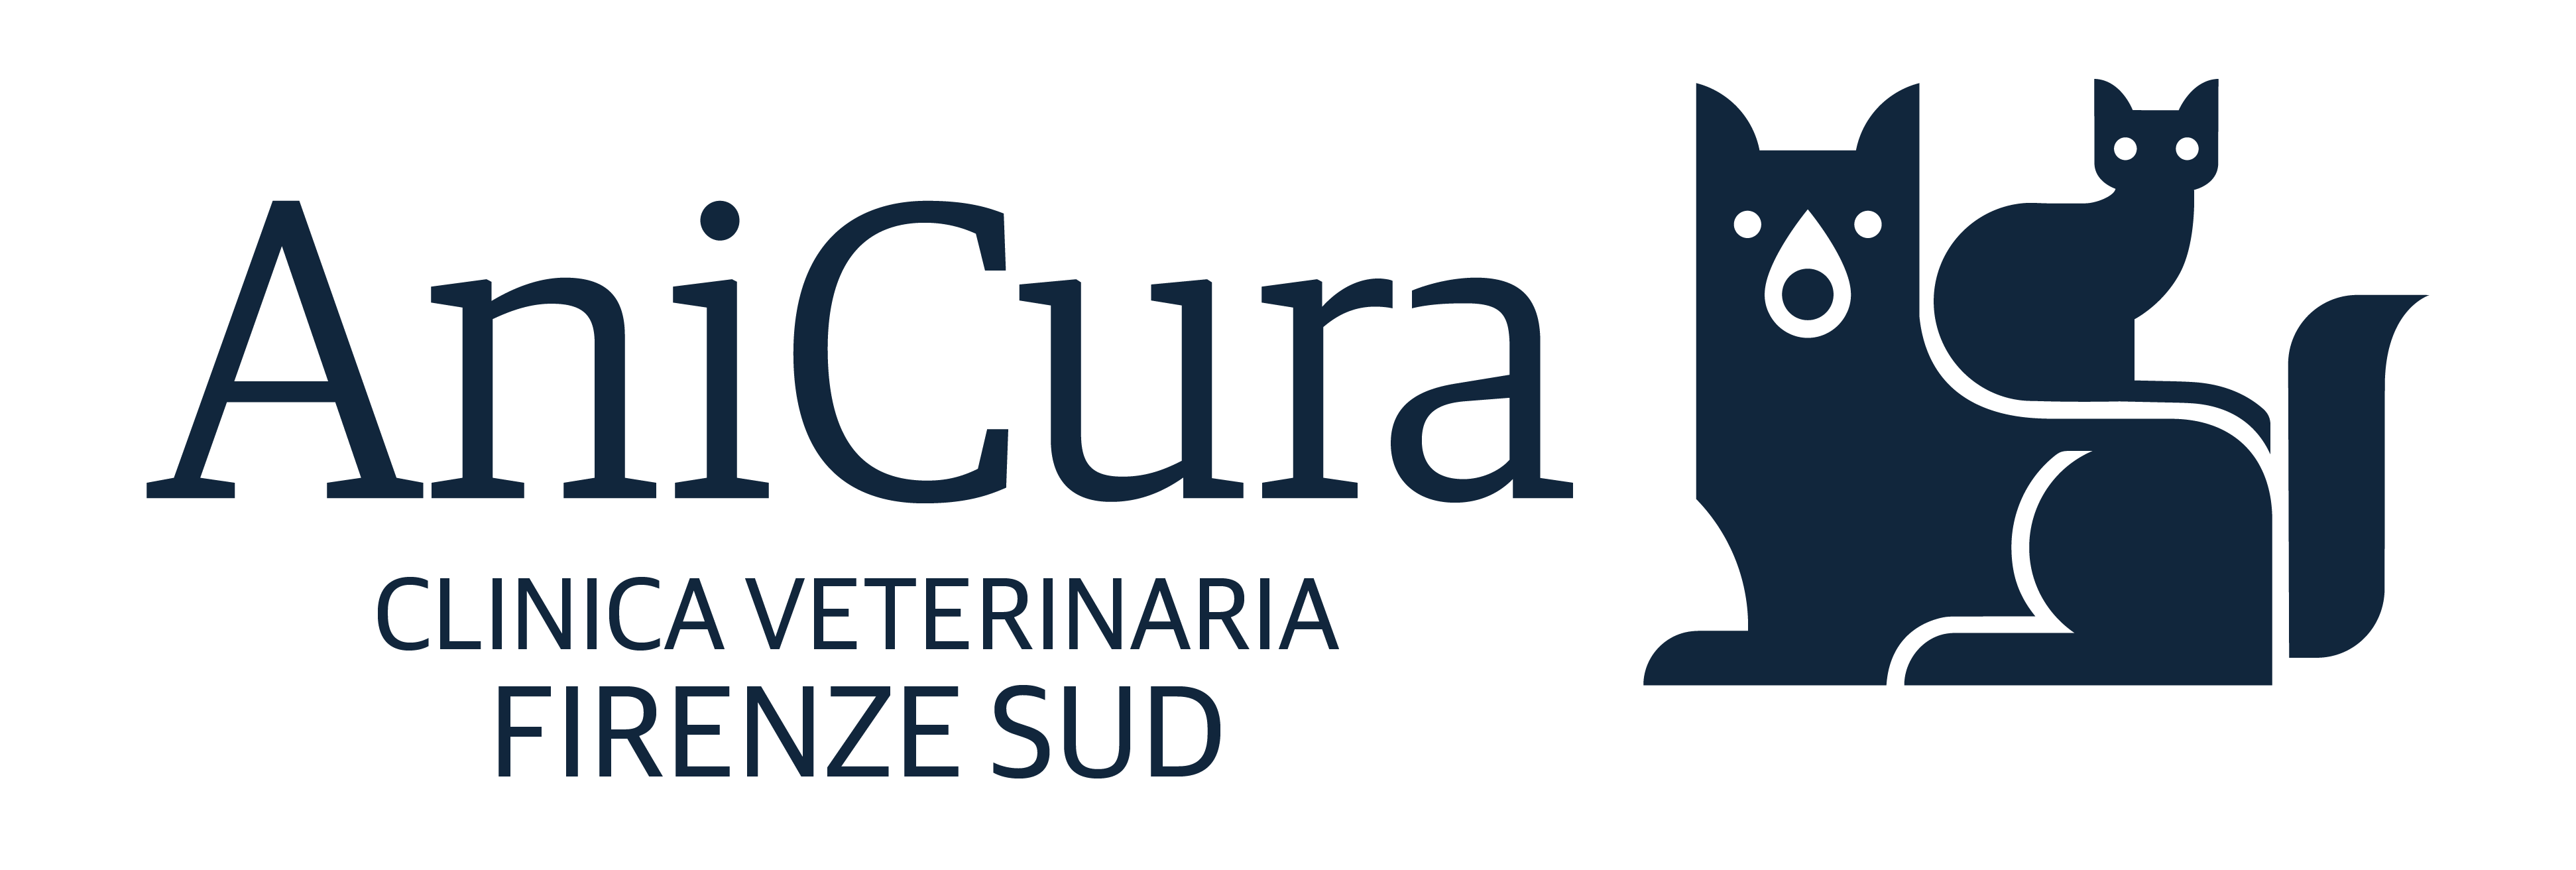 Clinica Veterinaria Firenze Sud logo